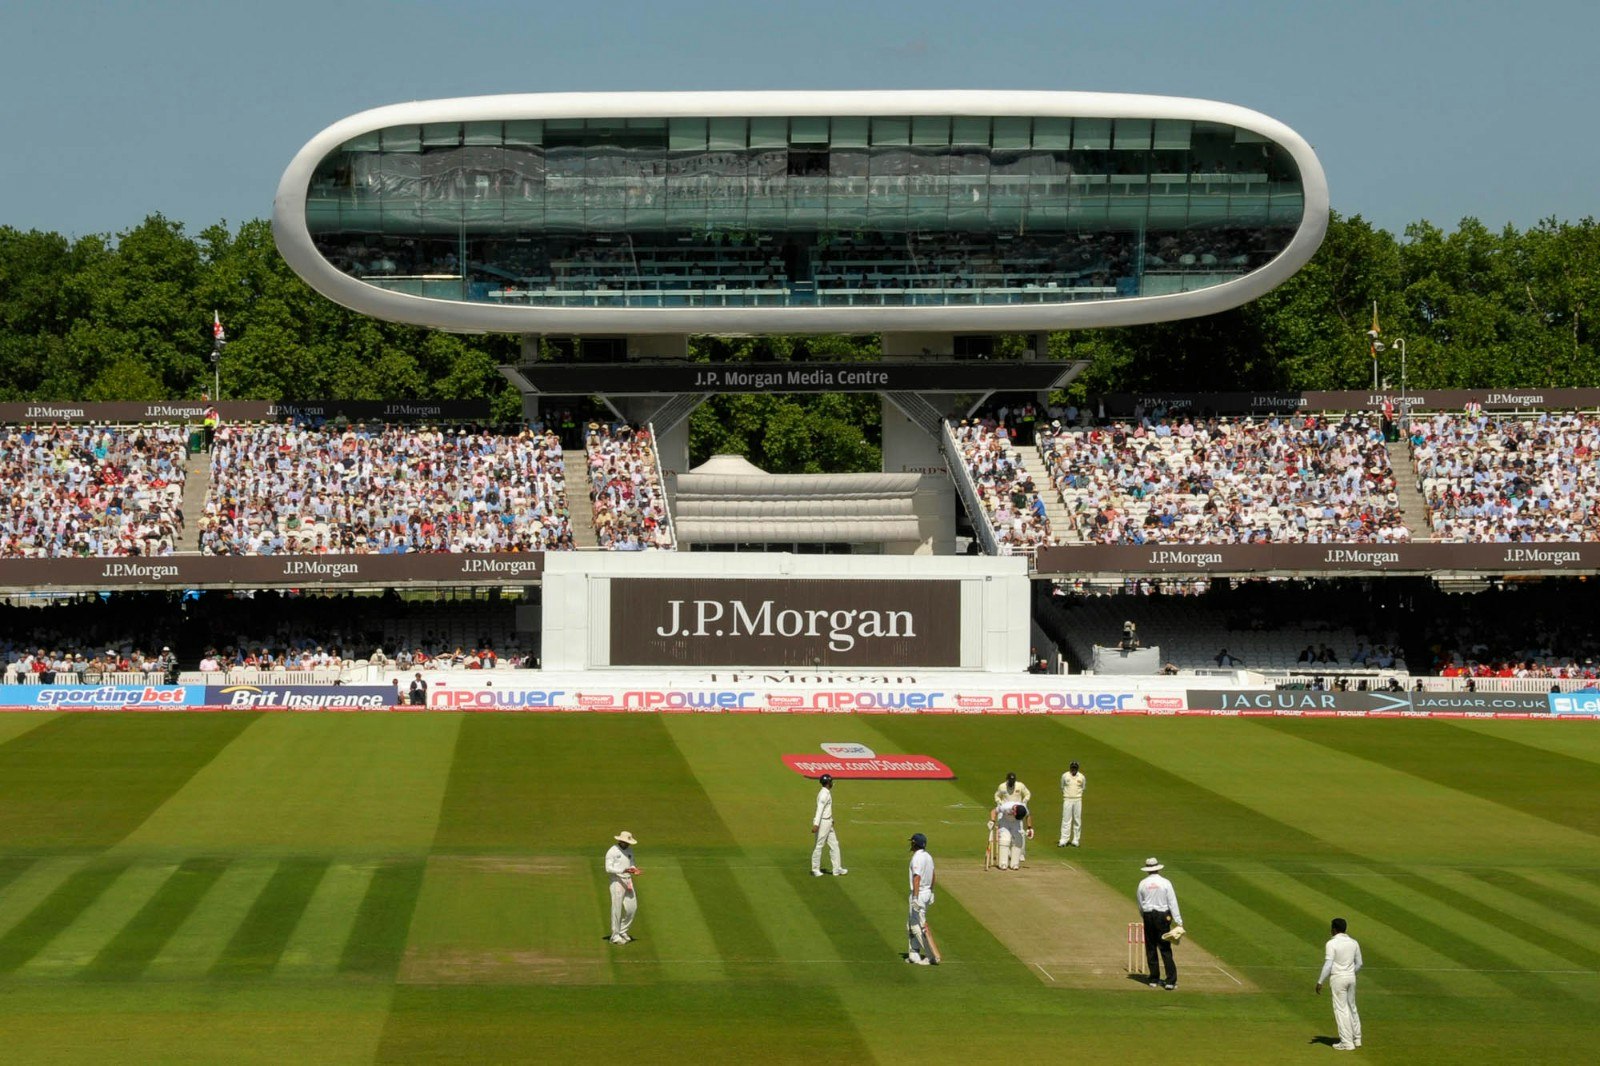 Lord's Cricket Ground - J.P. Morgan Media Centre image 5